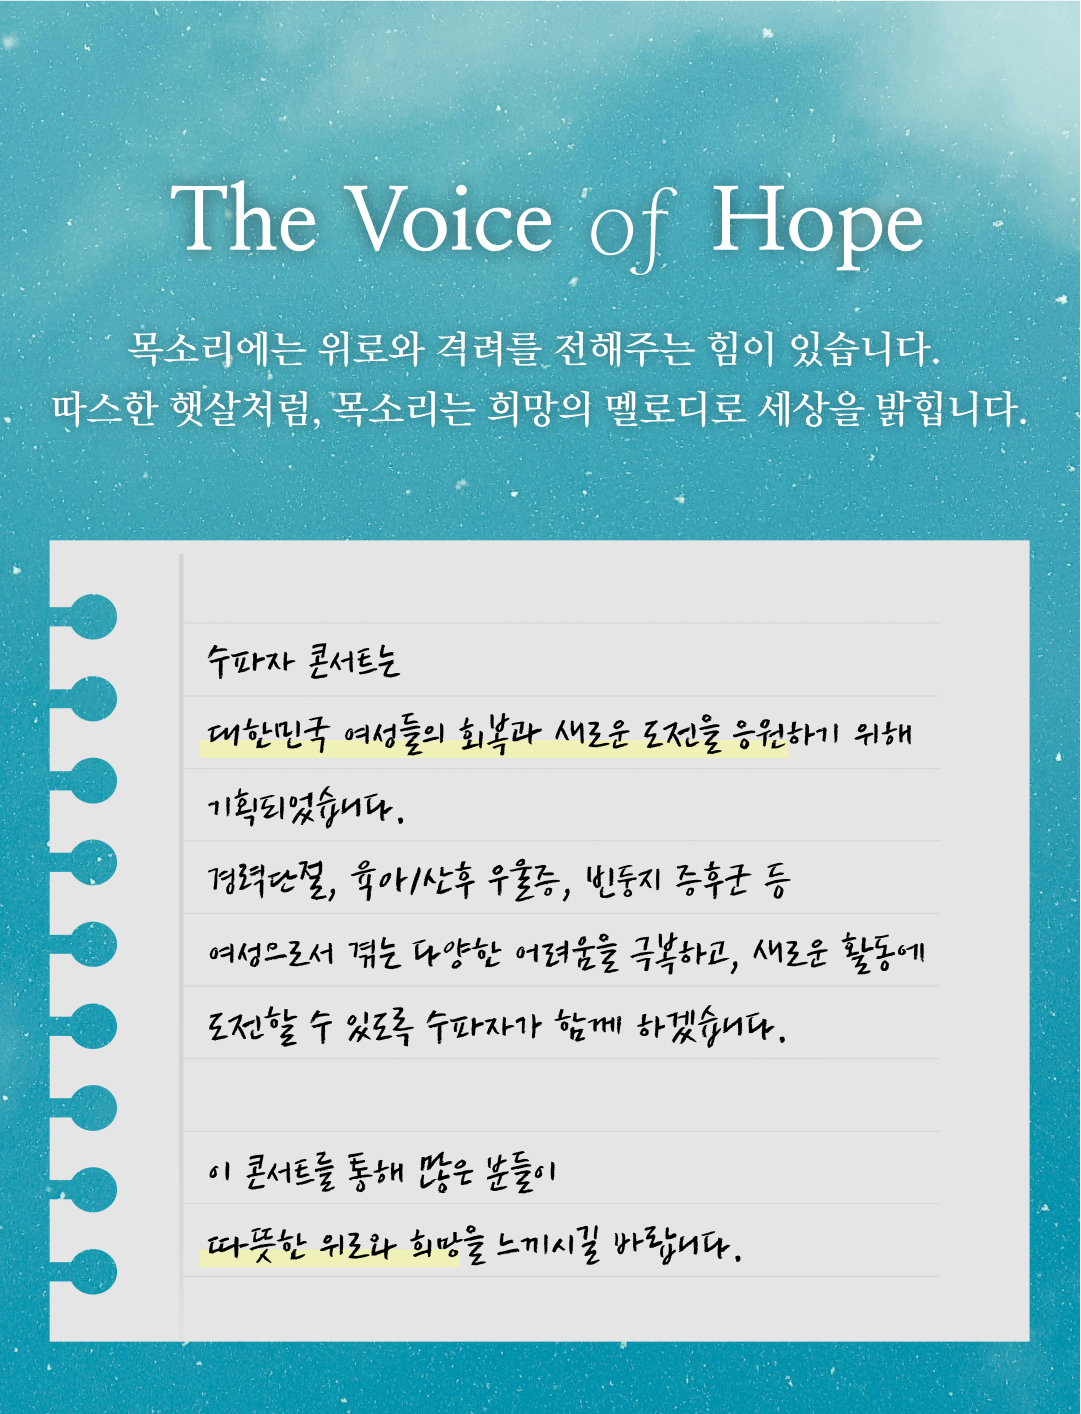 The Voice of Hope. 목소리에는 위로와 격려를 전해주는 힘이 있습니다. 따스한 햇살처럼, 목소리는 희망의 멜로디로 세상을 밝힙니다.